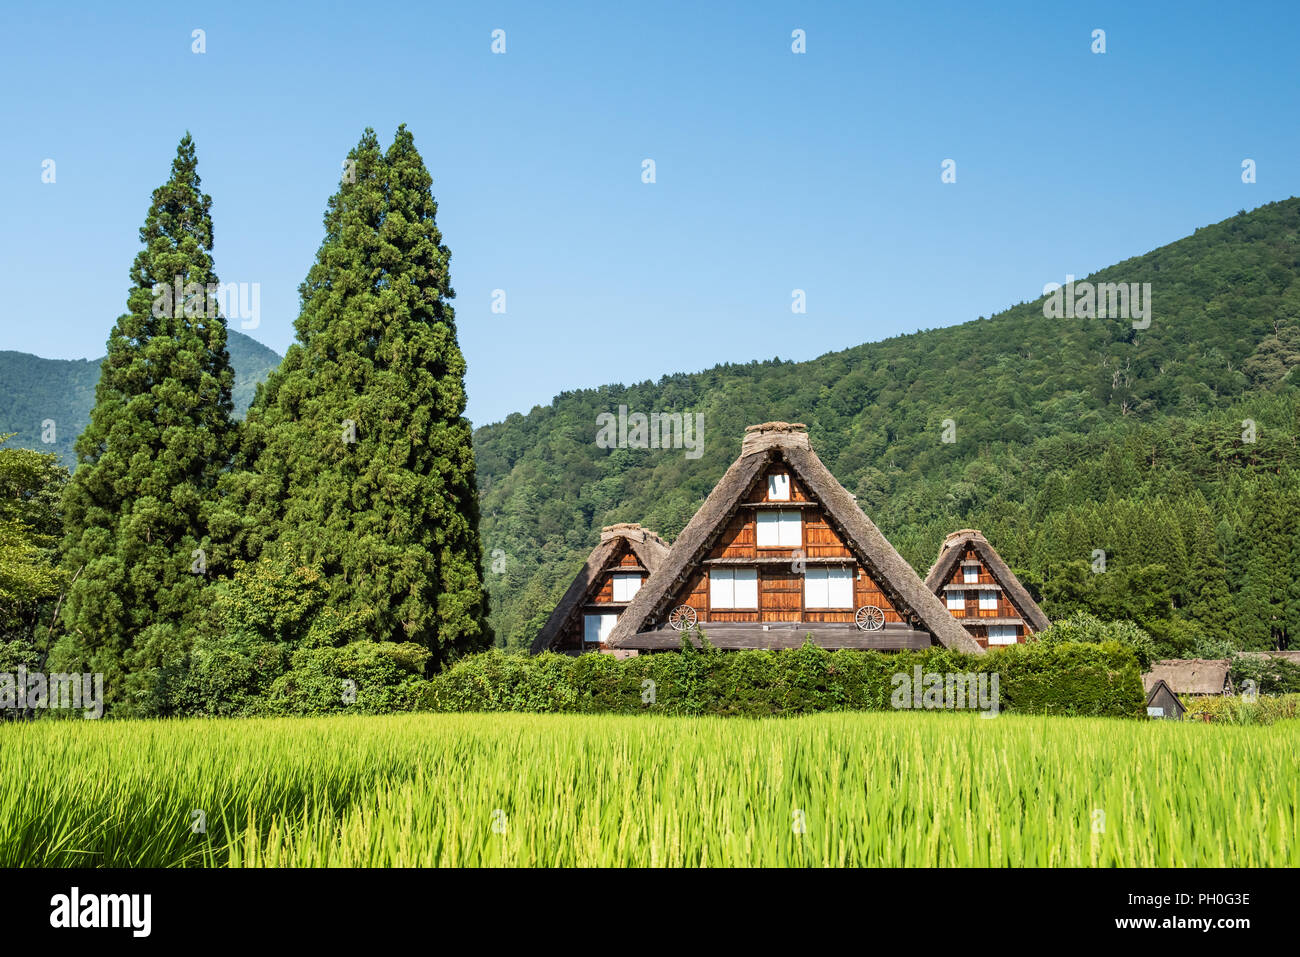 Historic Villages of Shirakawa-g and Gokayama, Shirakawa-mura, Gifu-ken, Japan, Asia, Eastern Asia Stock Photo